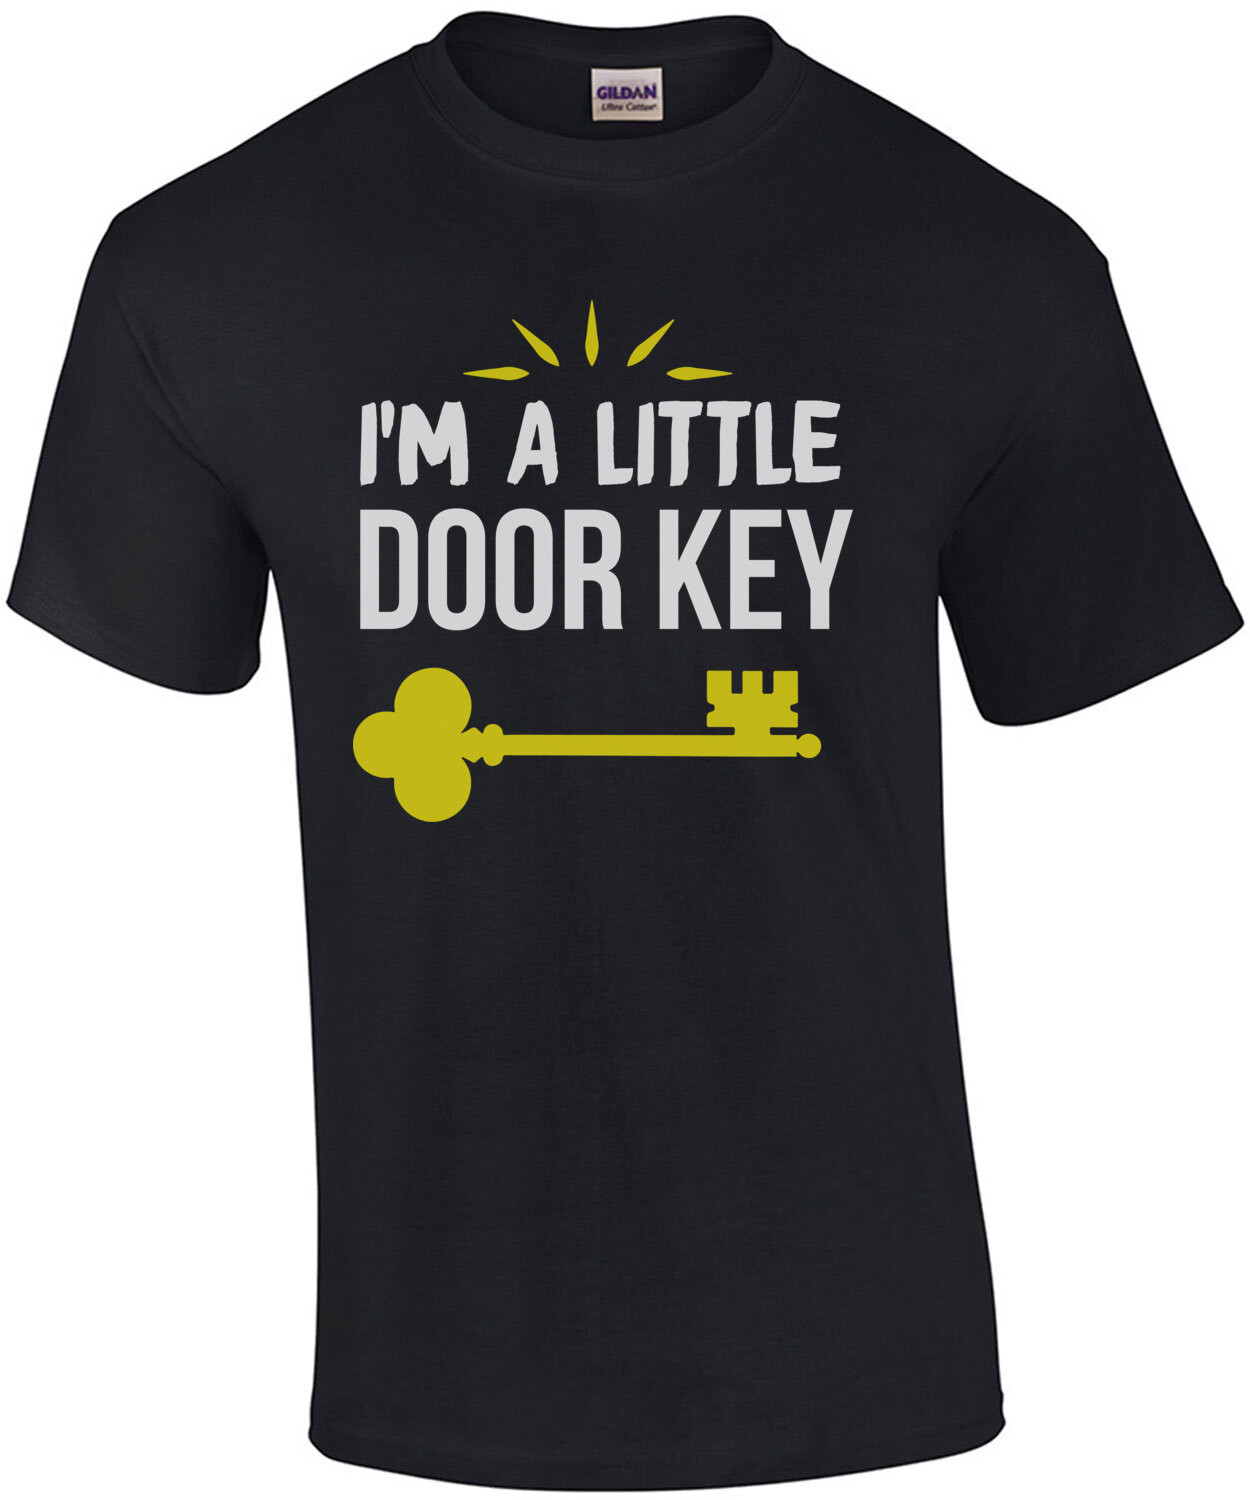 I'm a little door key - funny pun t-shirt